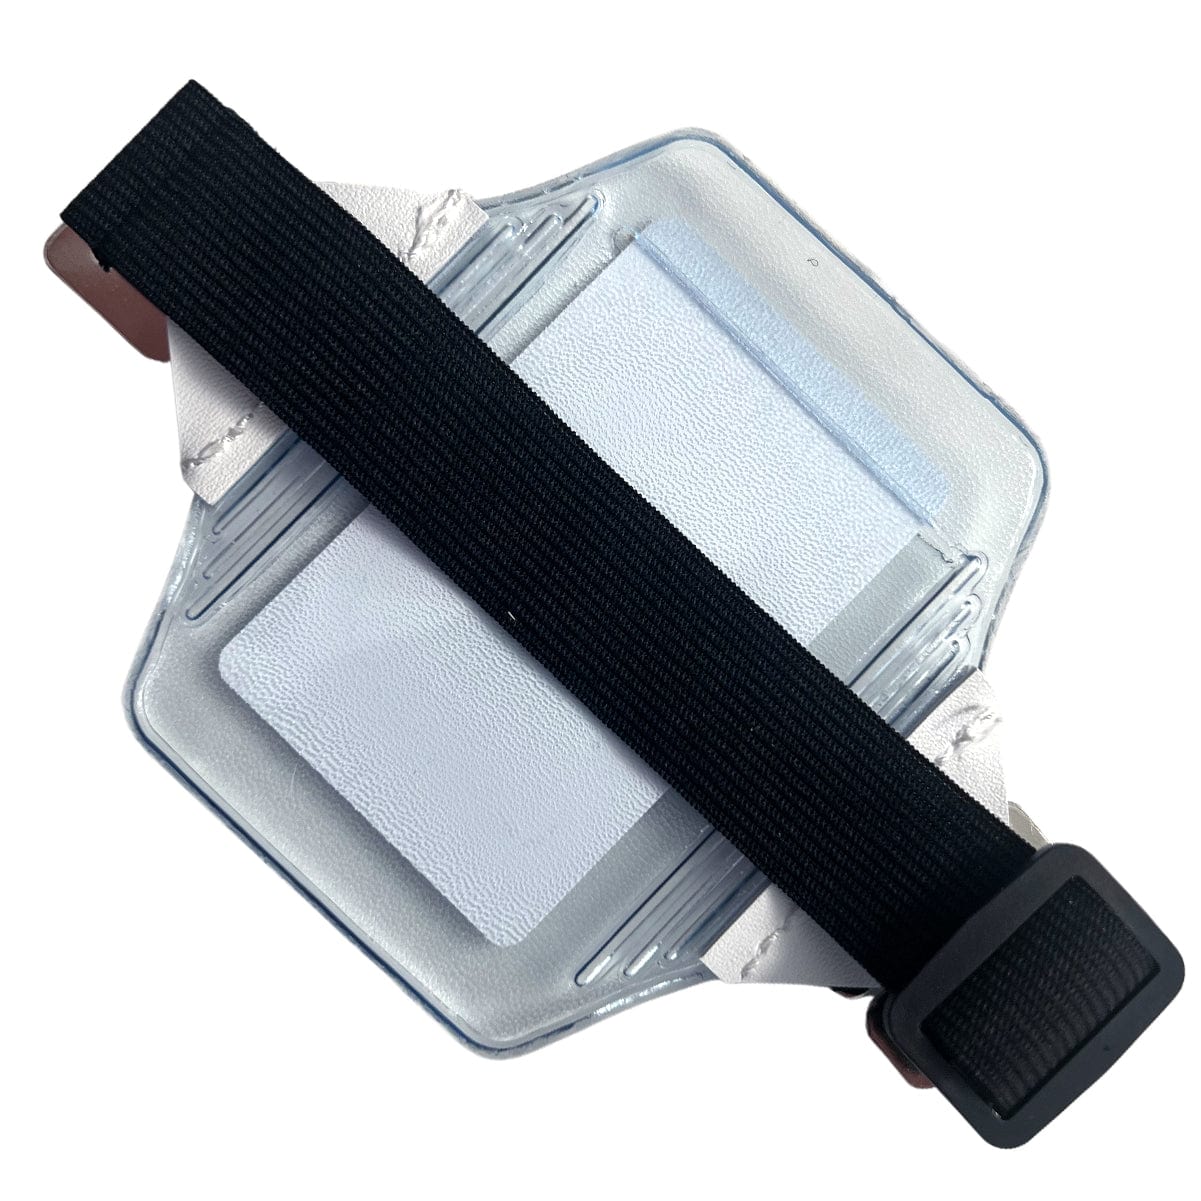 Armband Badge Holder with Black Adjustable Elastic Arm Band & Hook